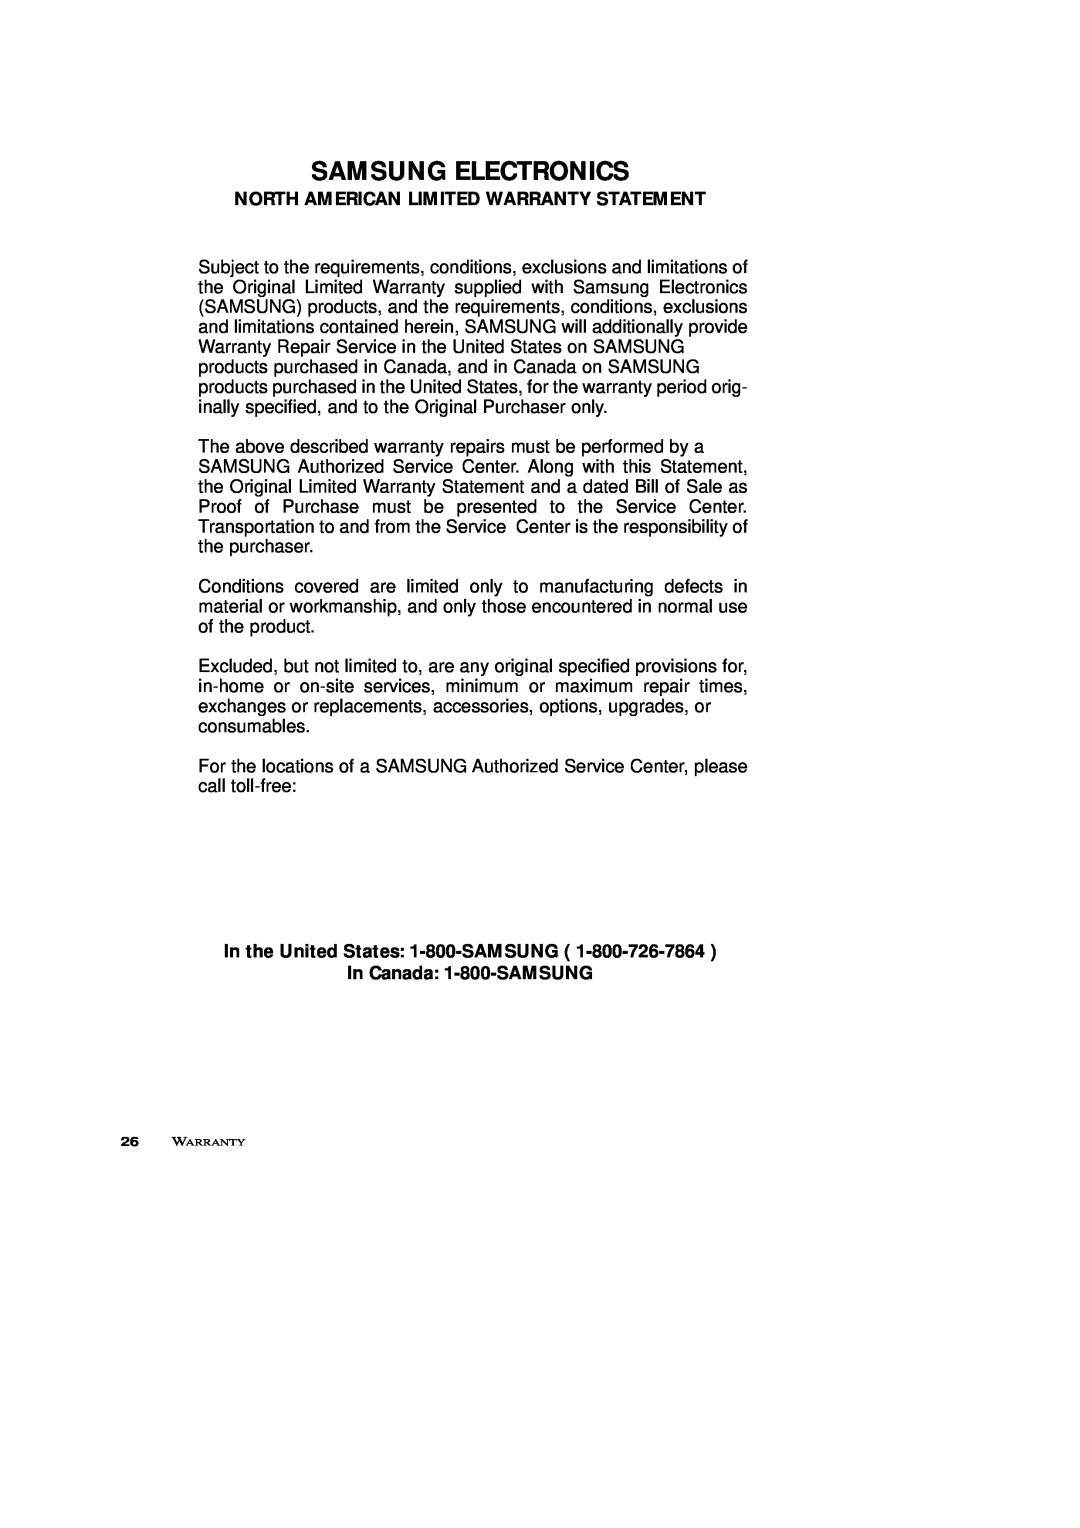 Samsung SRH1230ZG owner manual Samsung Electronics, North American Limited Warranty Statement 